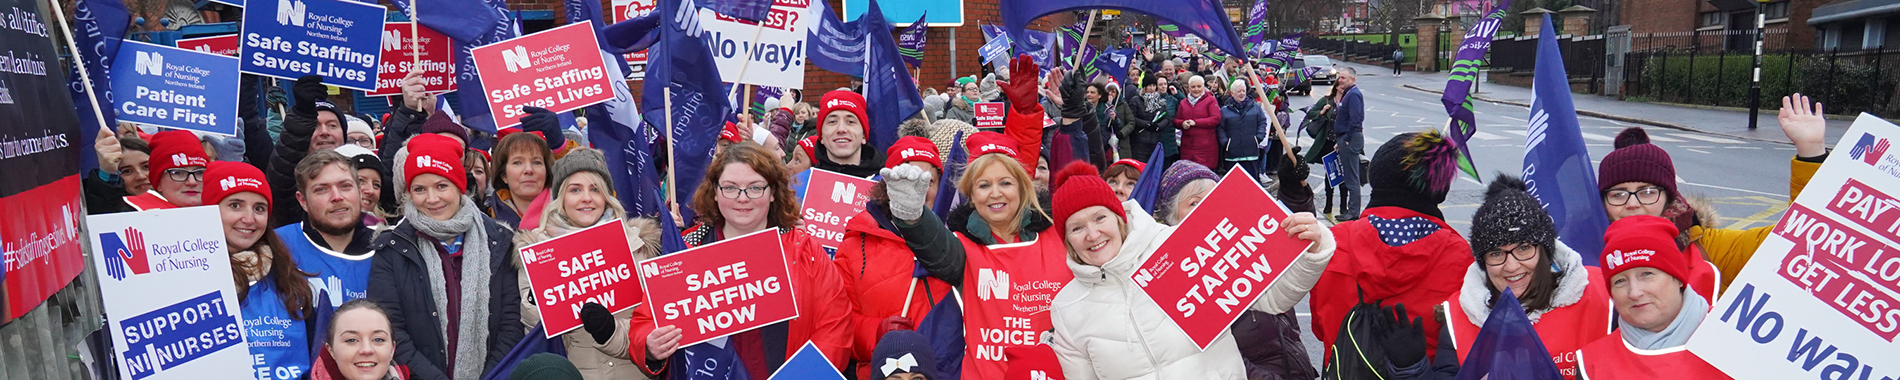 Nurses campaigning for safe staffing